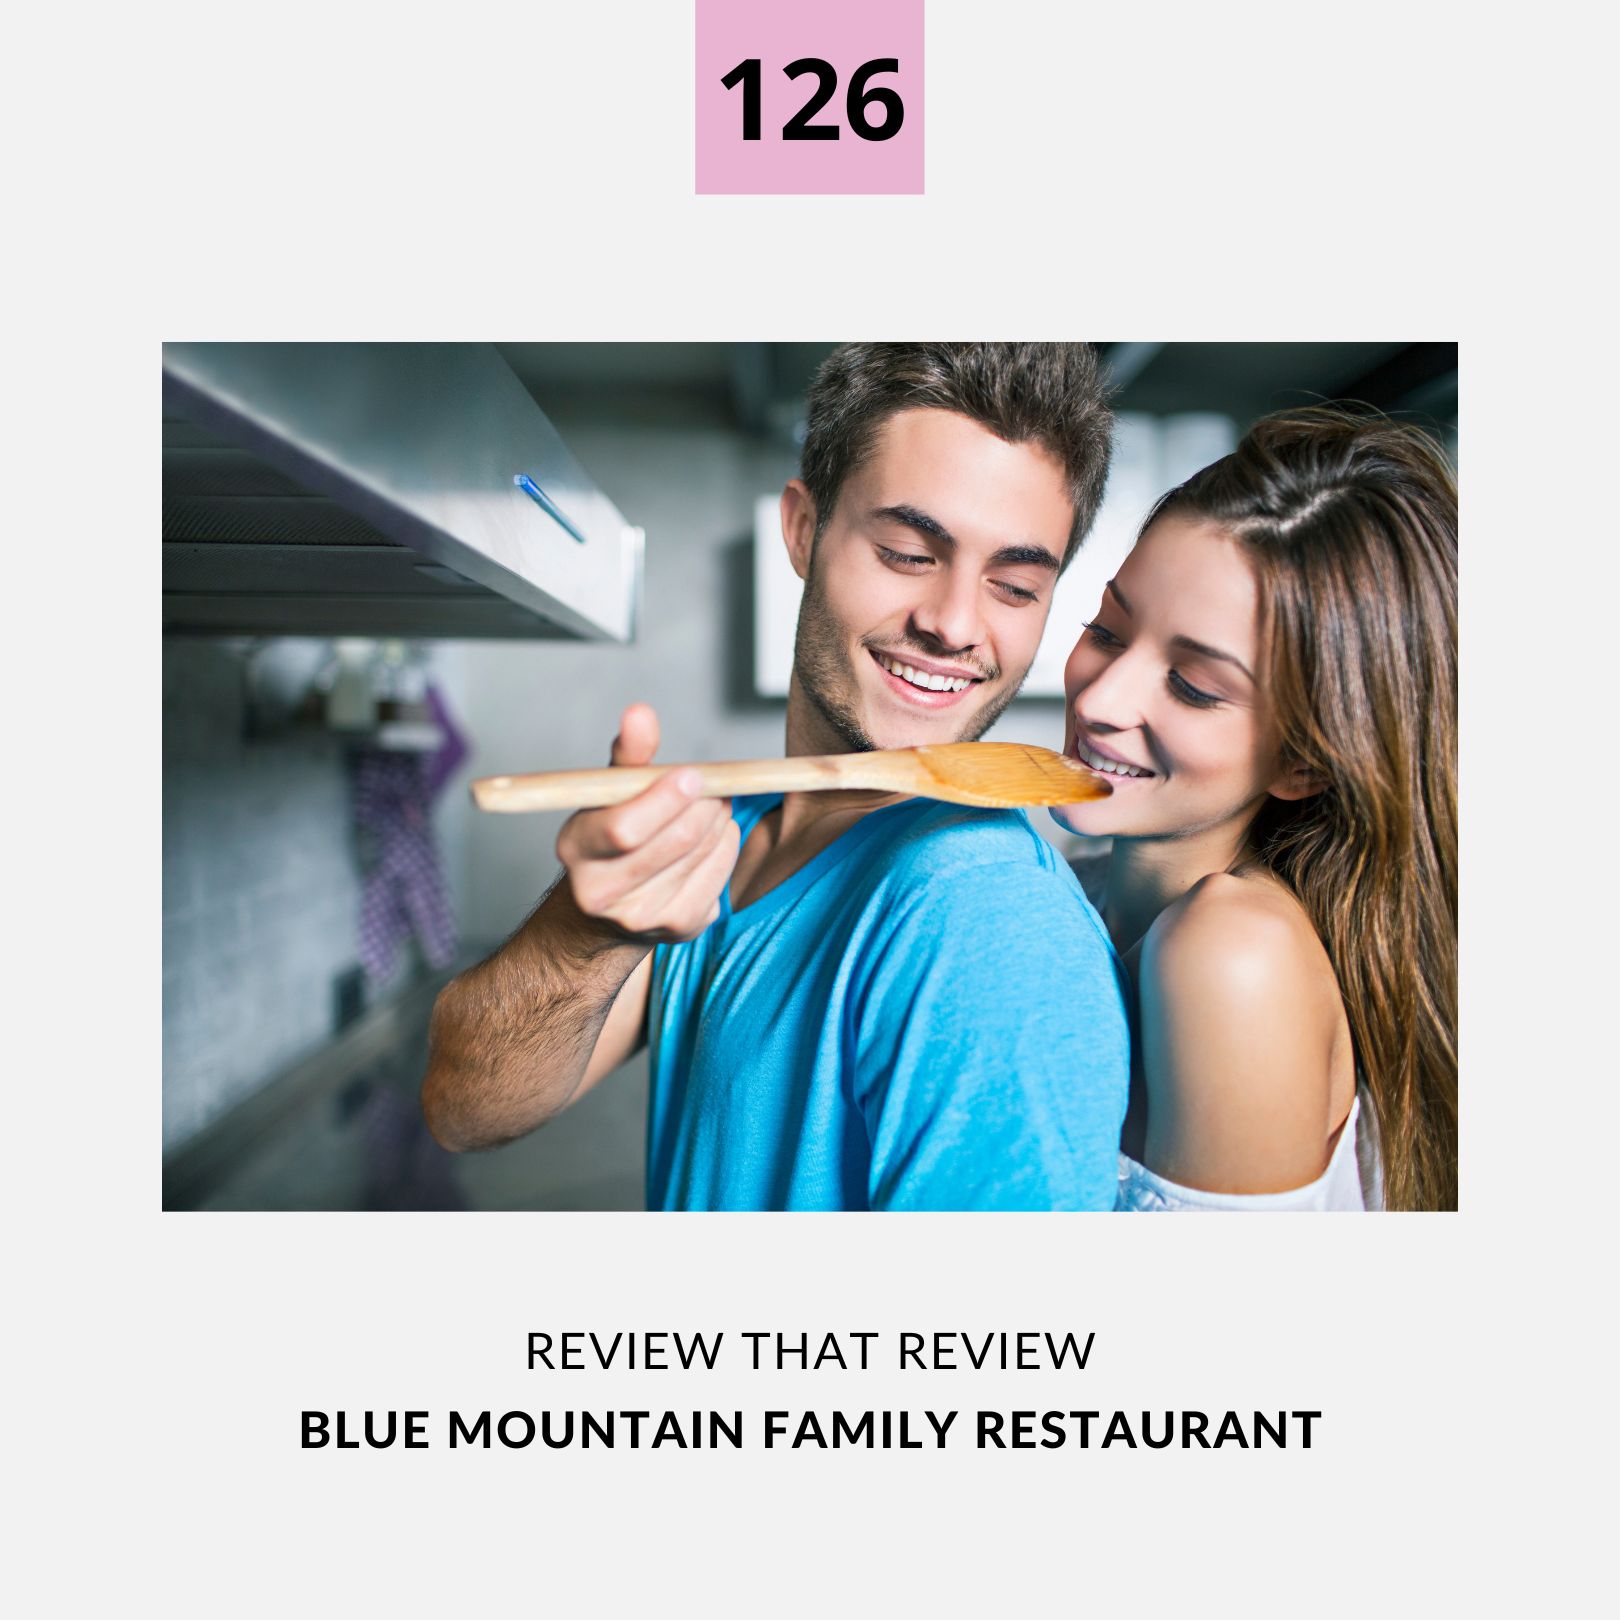 126: Blue Mountain Family Restaurant - 1 Star Review